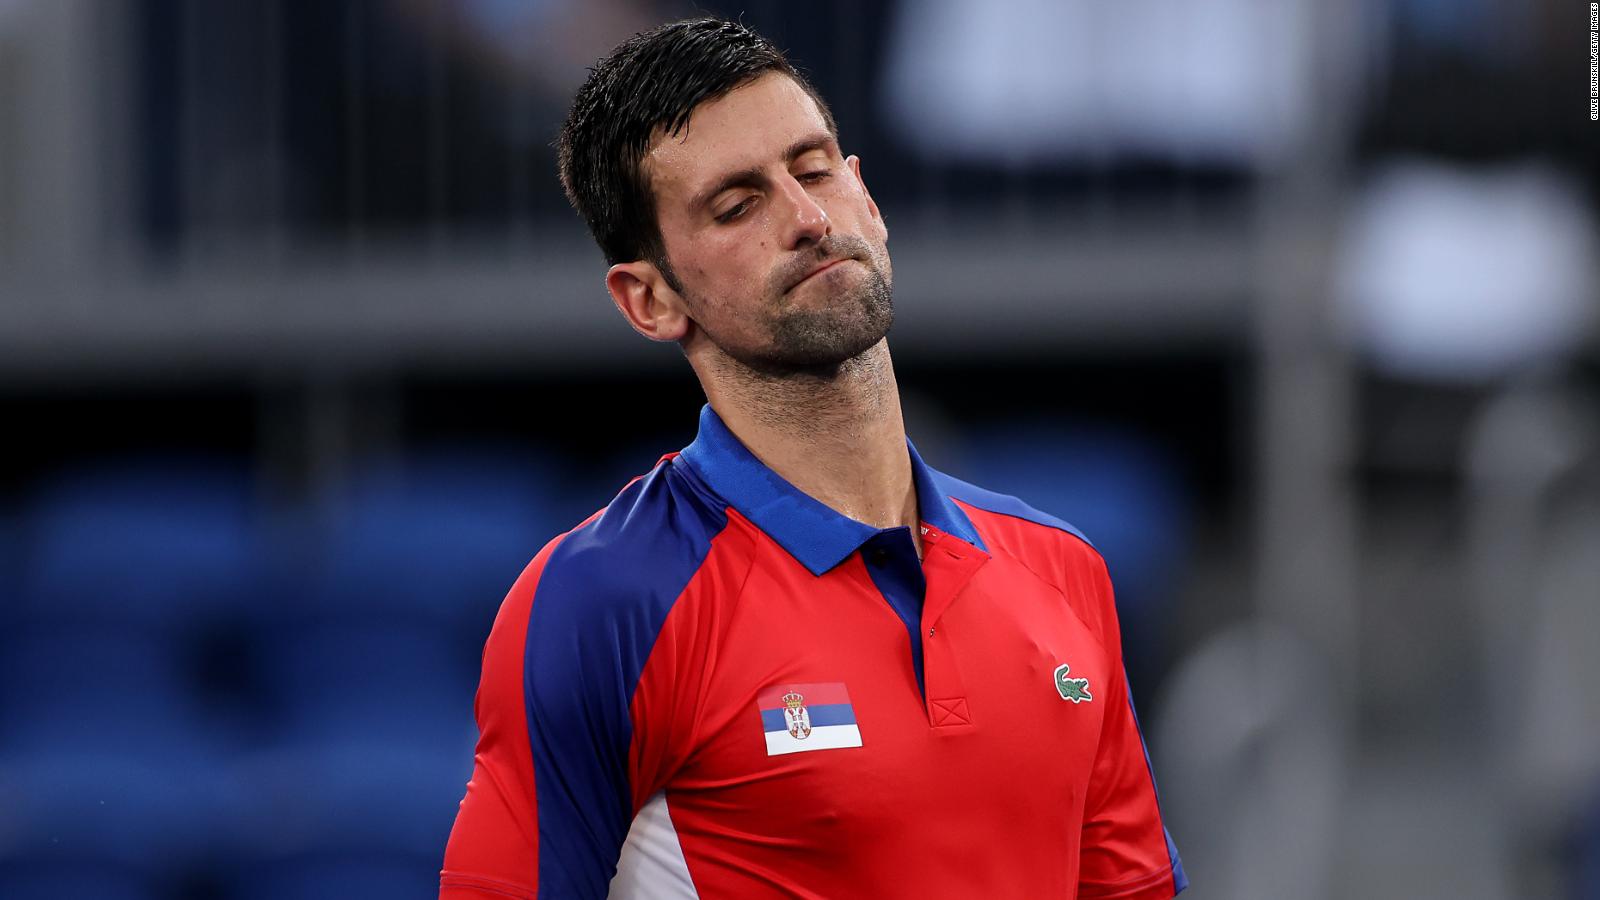 210730104944 Novak Djokovic Olympics Semifinals Full 169 (1)